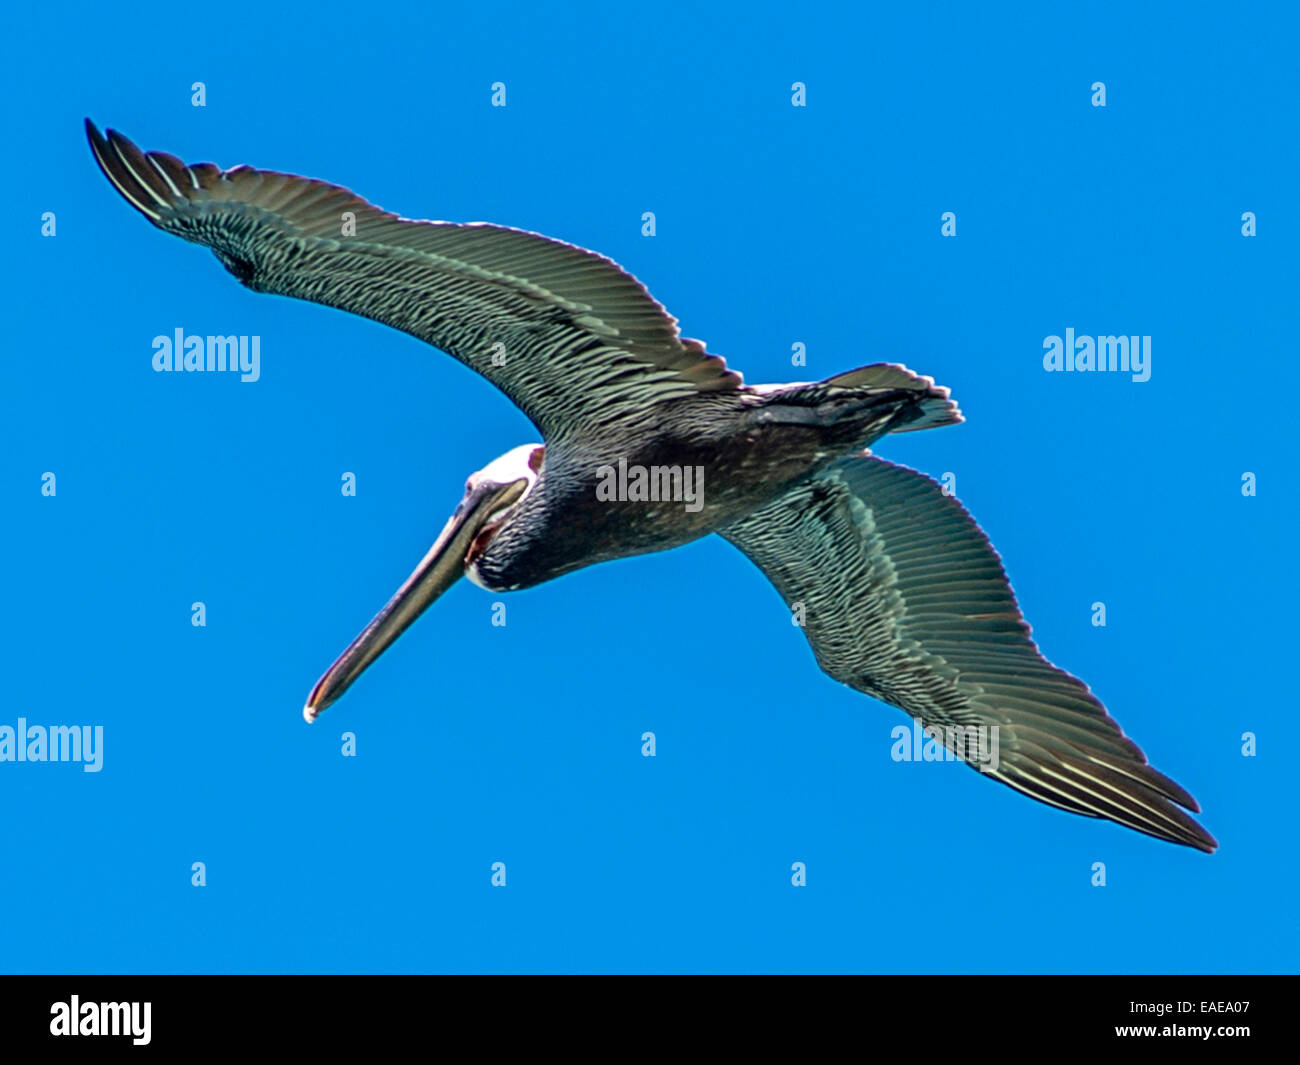 Wild Brown Pelican [Pelecanus occidentalis] in full flight with blue sky background. Stock Photo